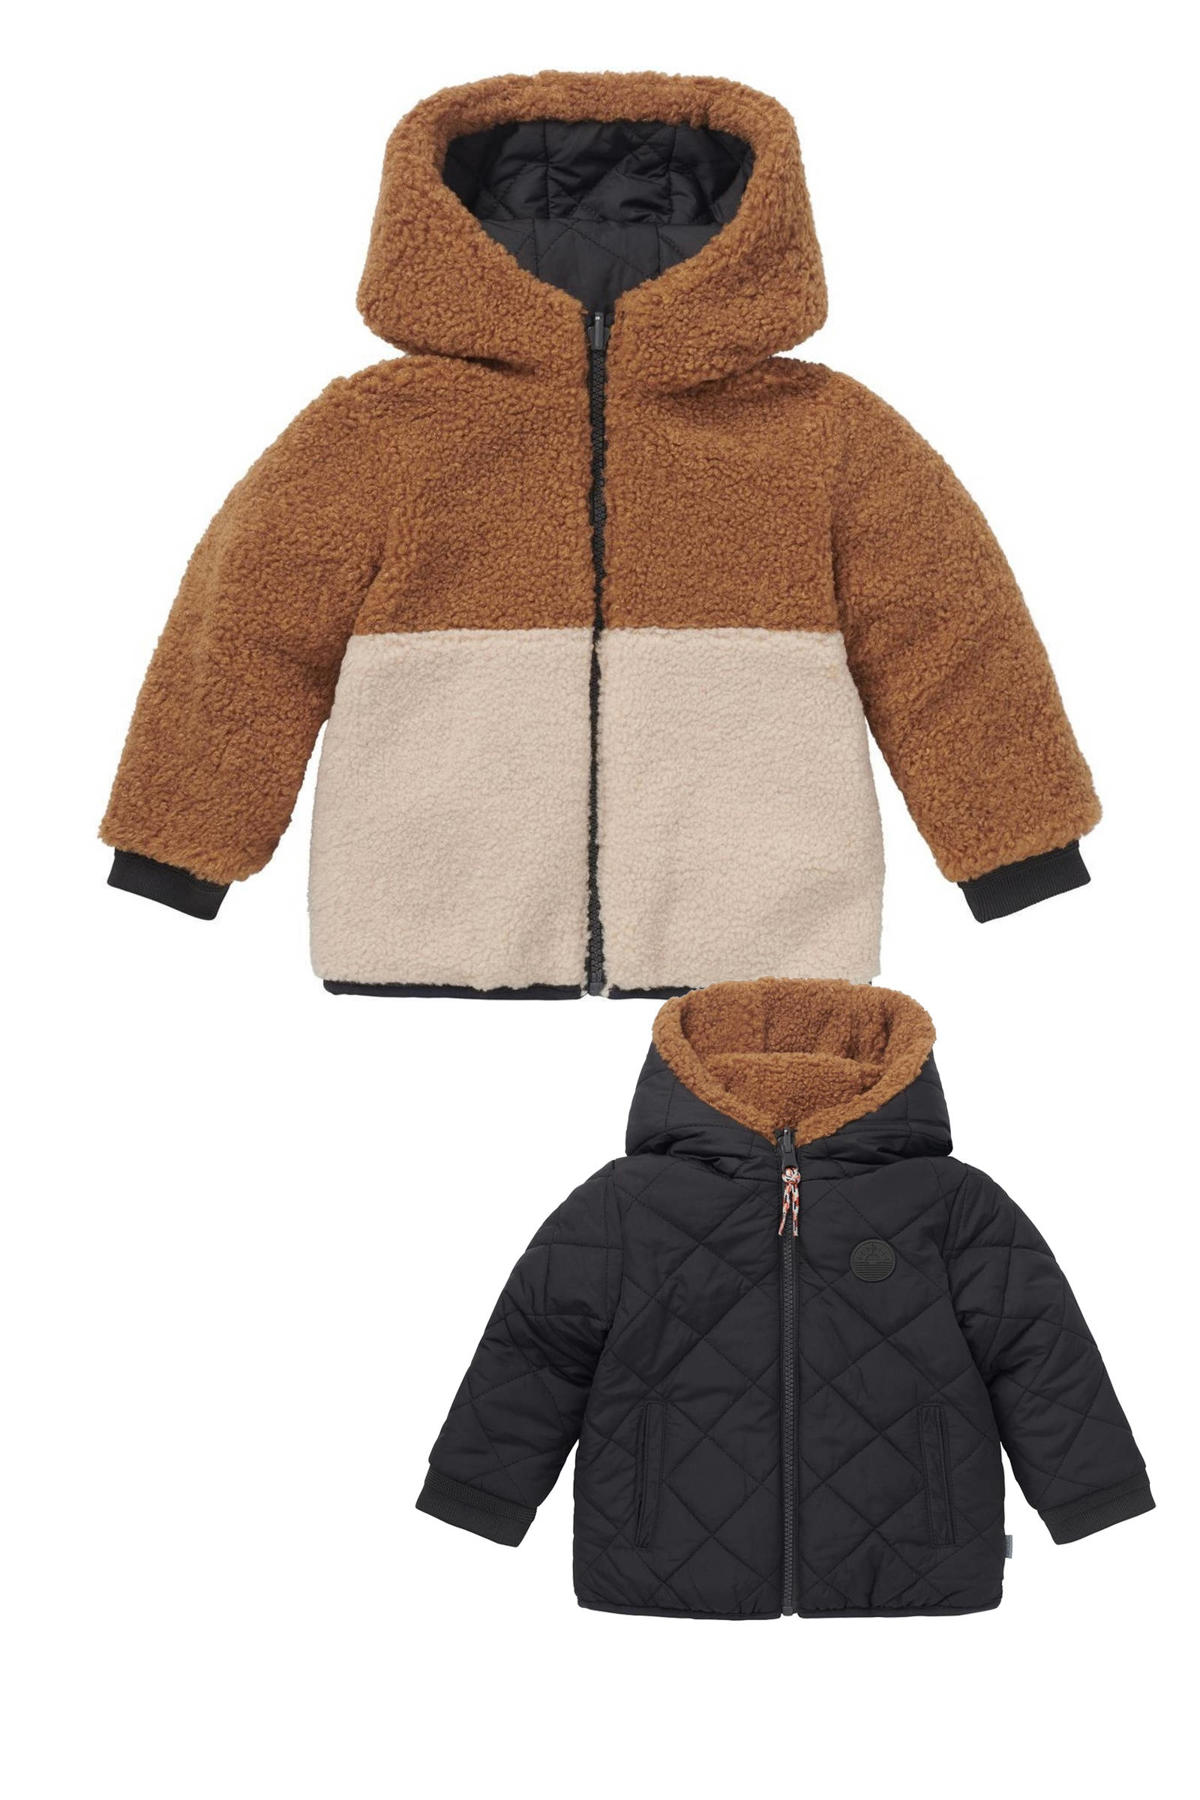 Narabar Identiteit voorzien Noppies baby reversible gewatteerde winterjas Jetmore  donkerblauw/beige/bruin | wehkamp